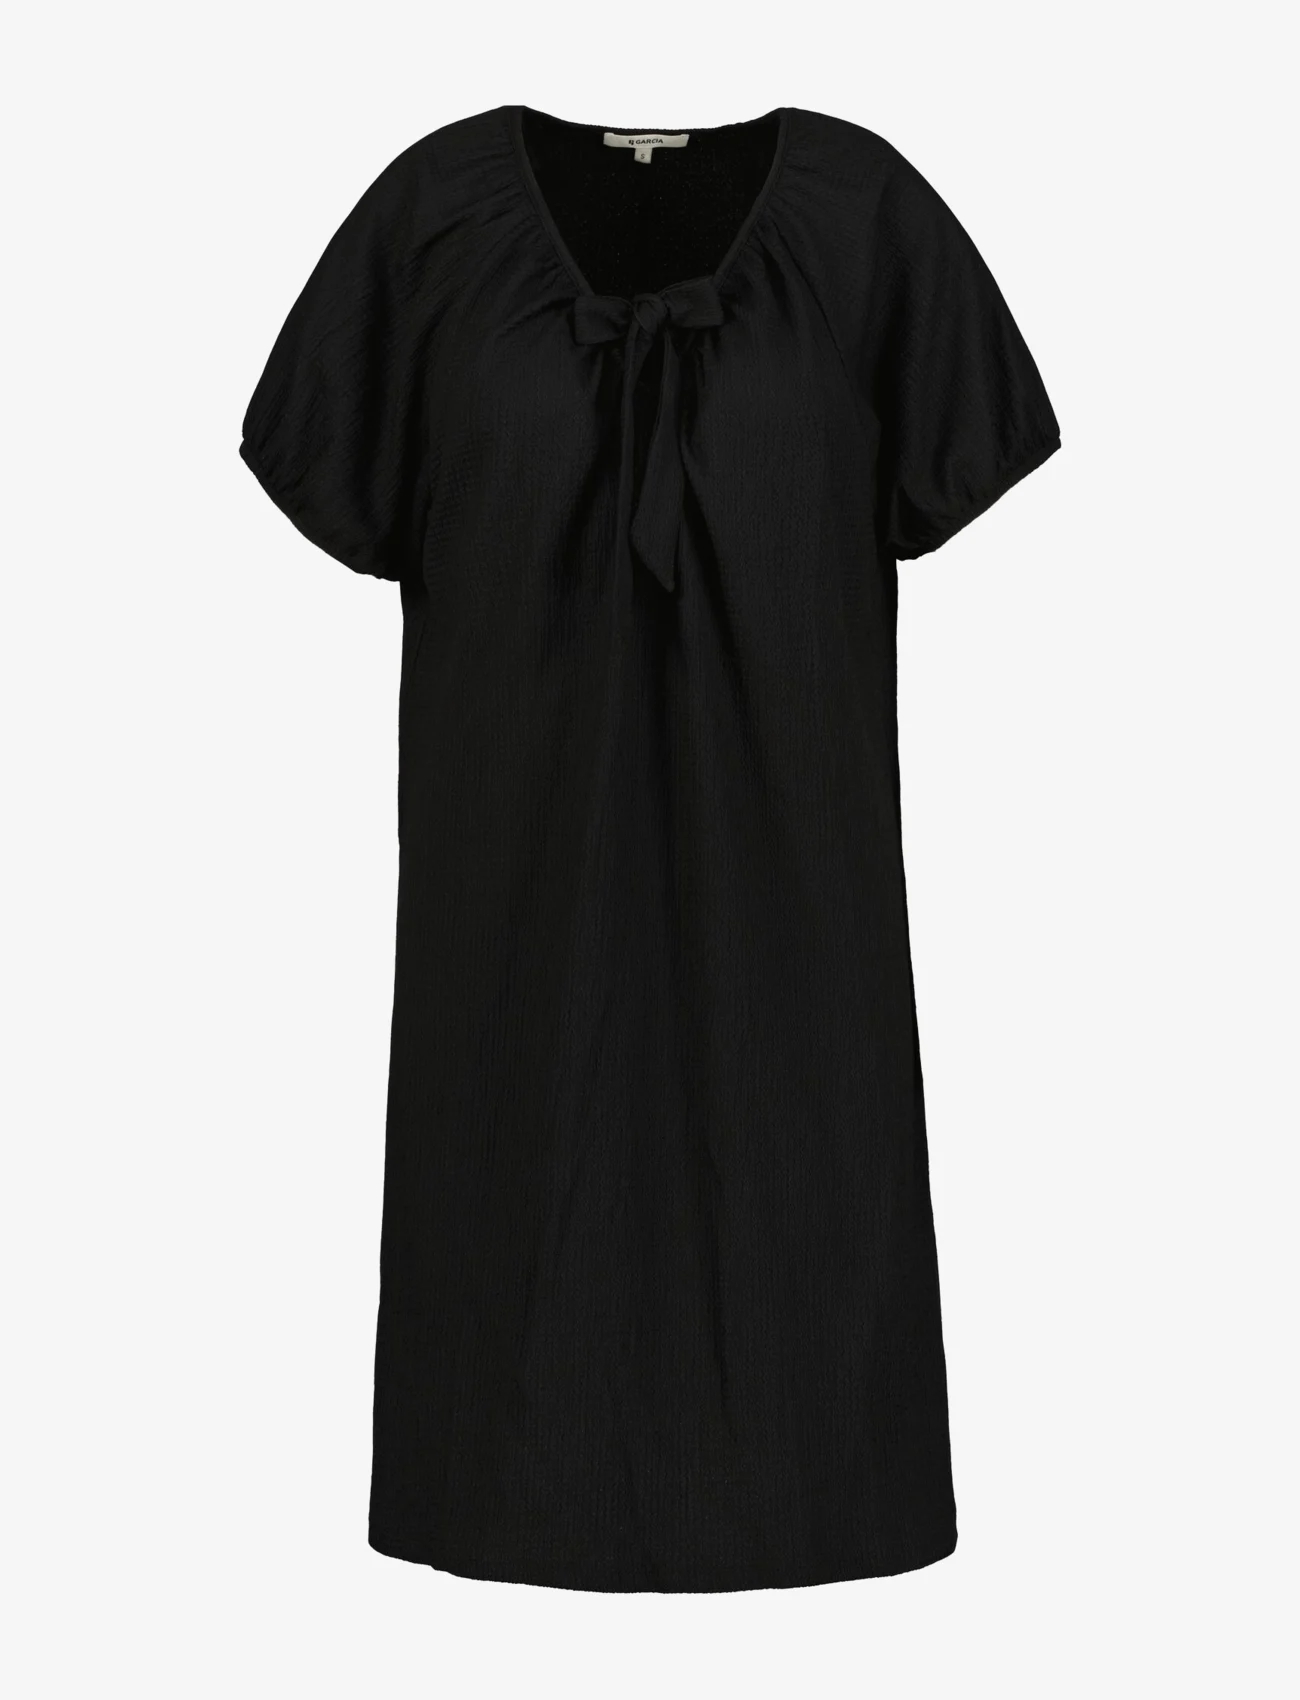 Garcia - ladies dress - sommerkleider - black - 0